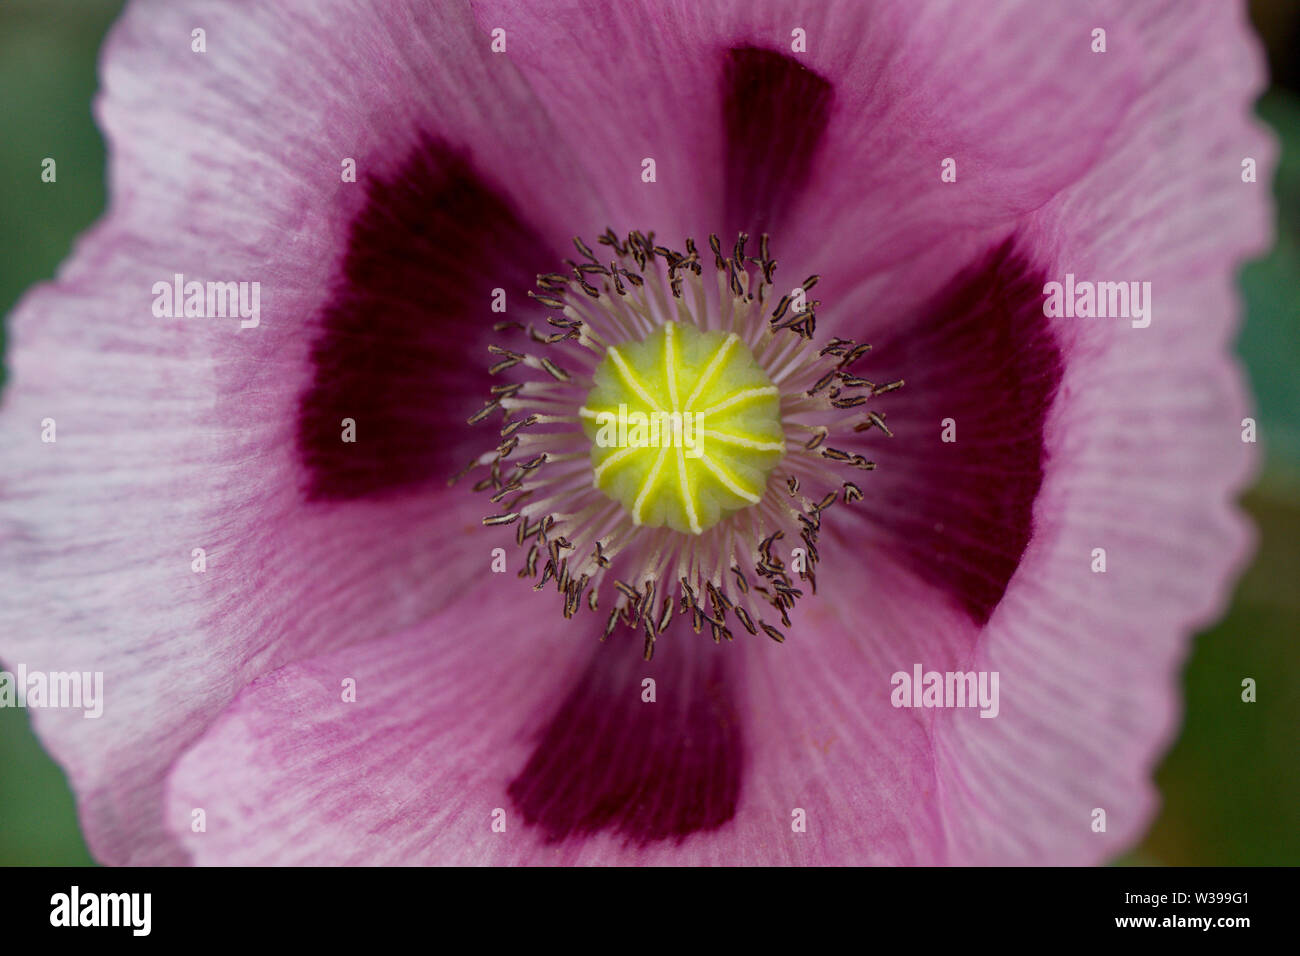 Poppy flower up close Stock Photo